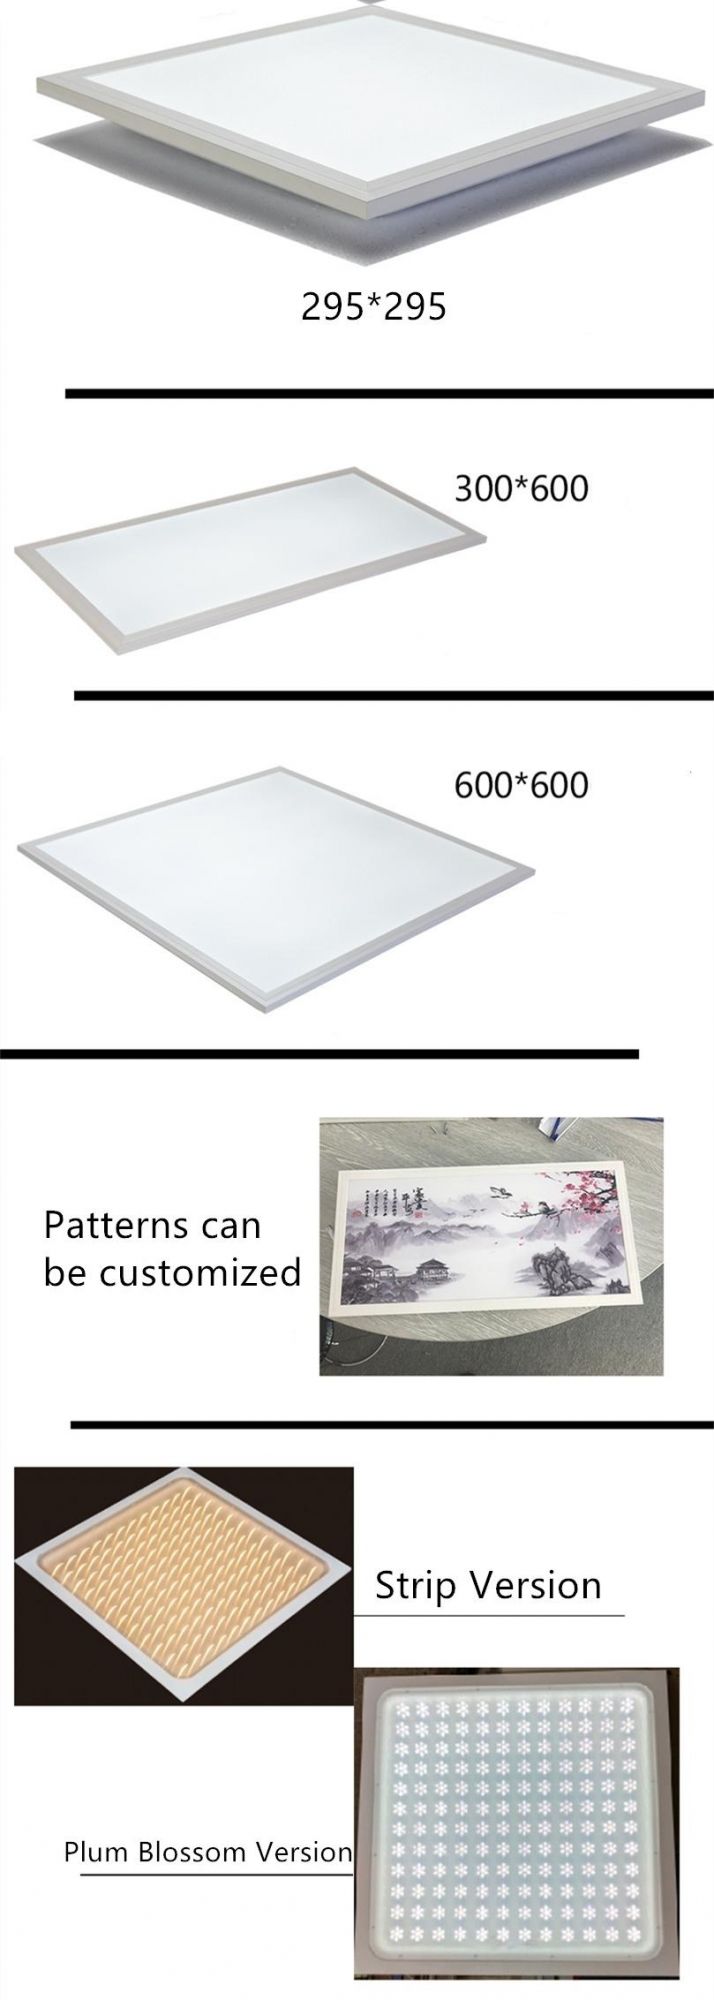 600*600 25W 32W 42W 48W Recessed Backlit Aluminium LED Panel Light